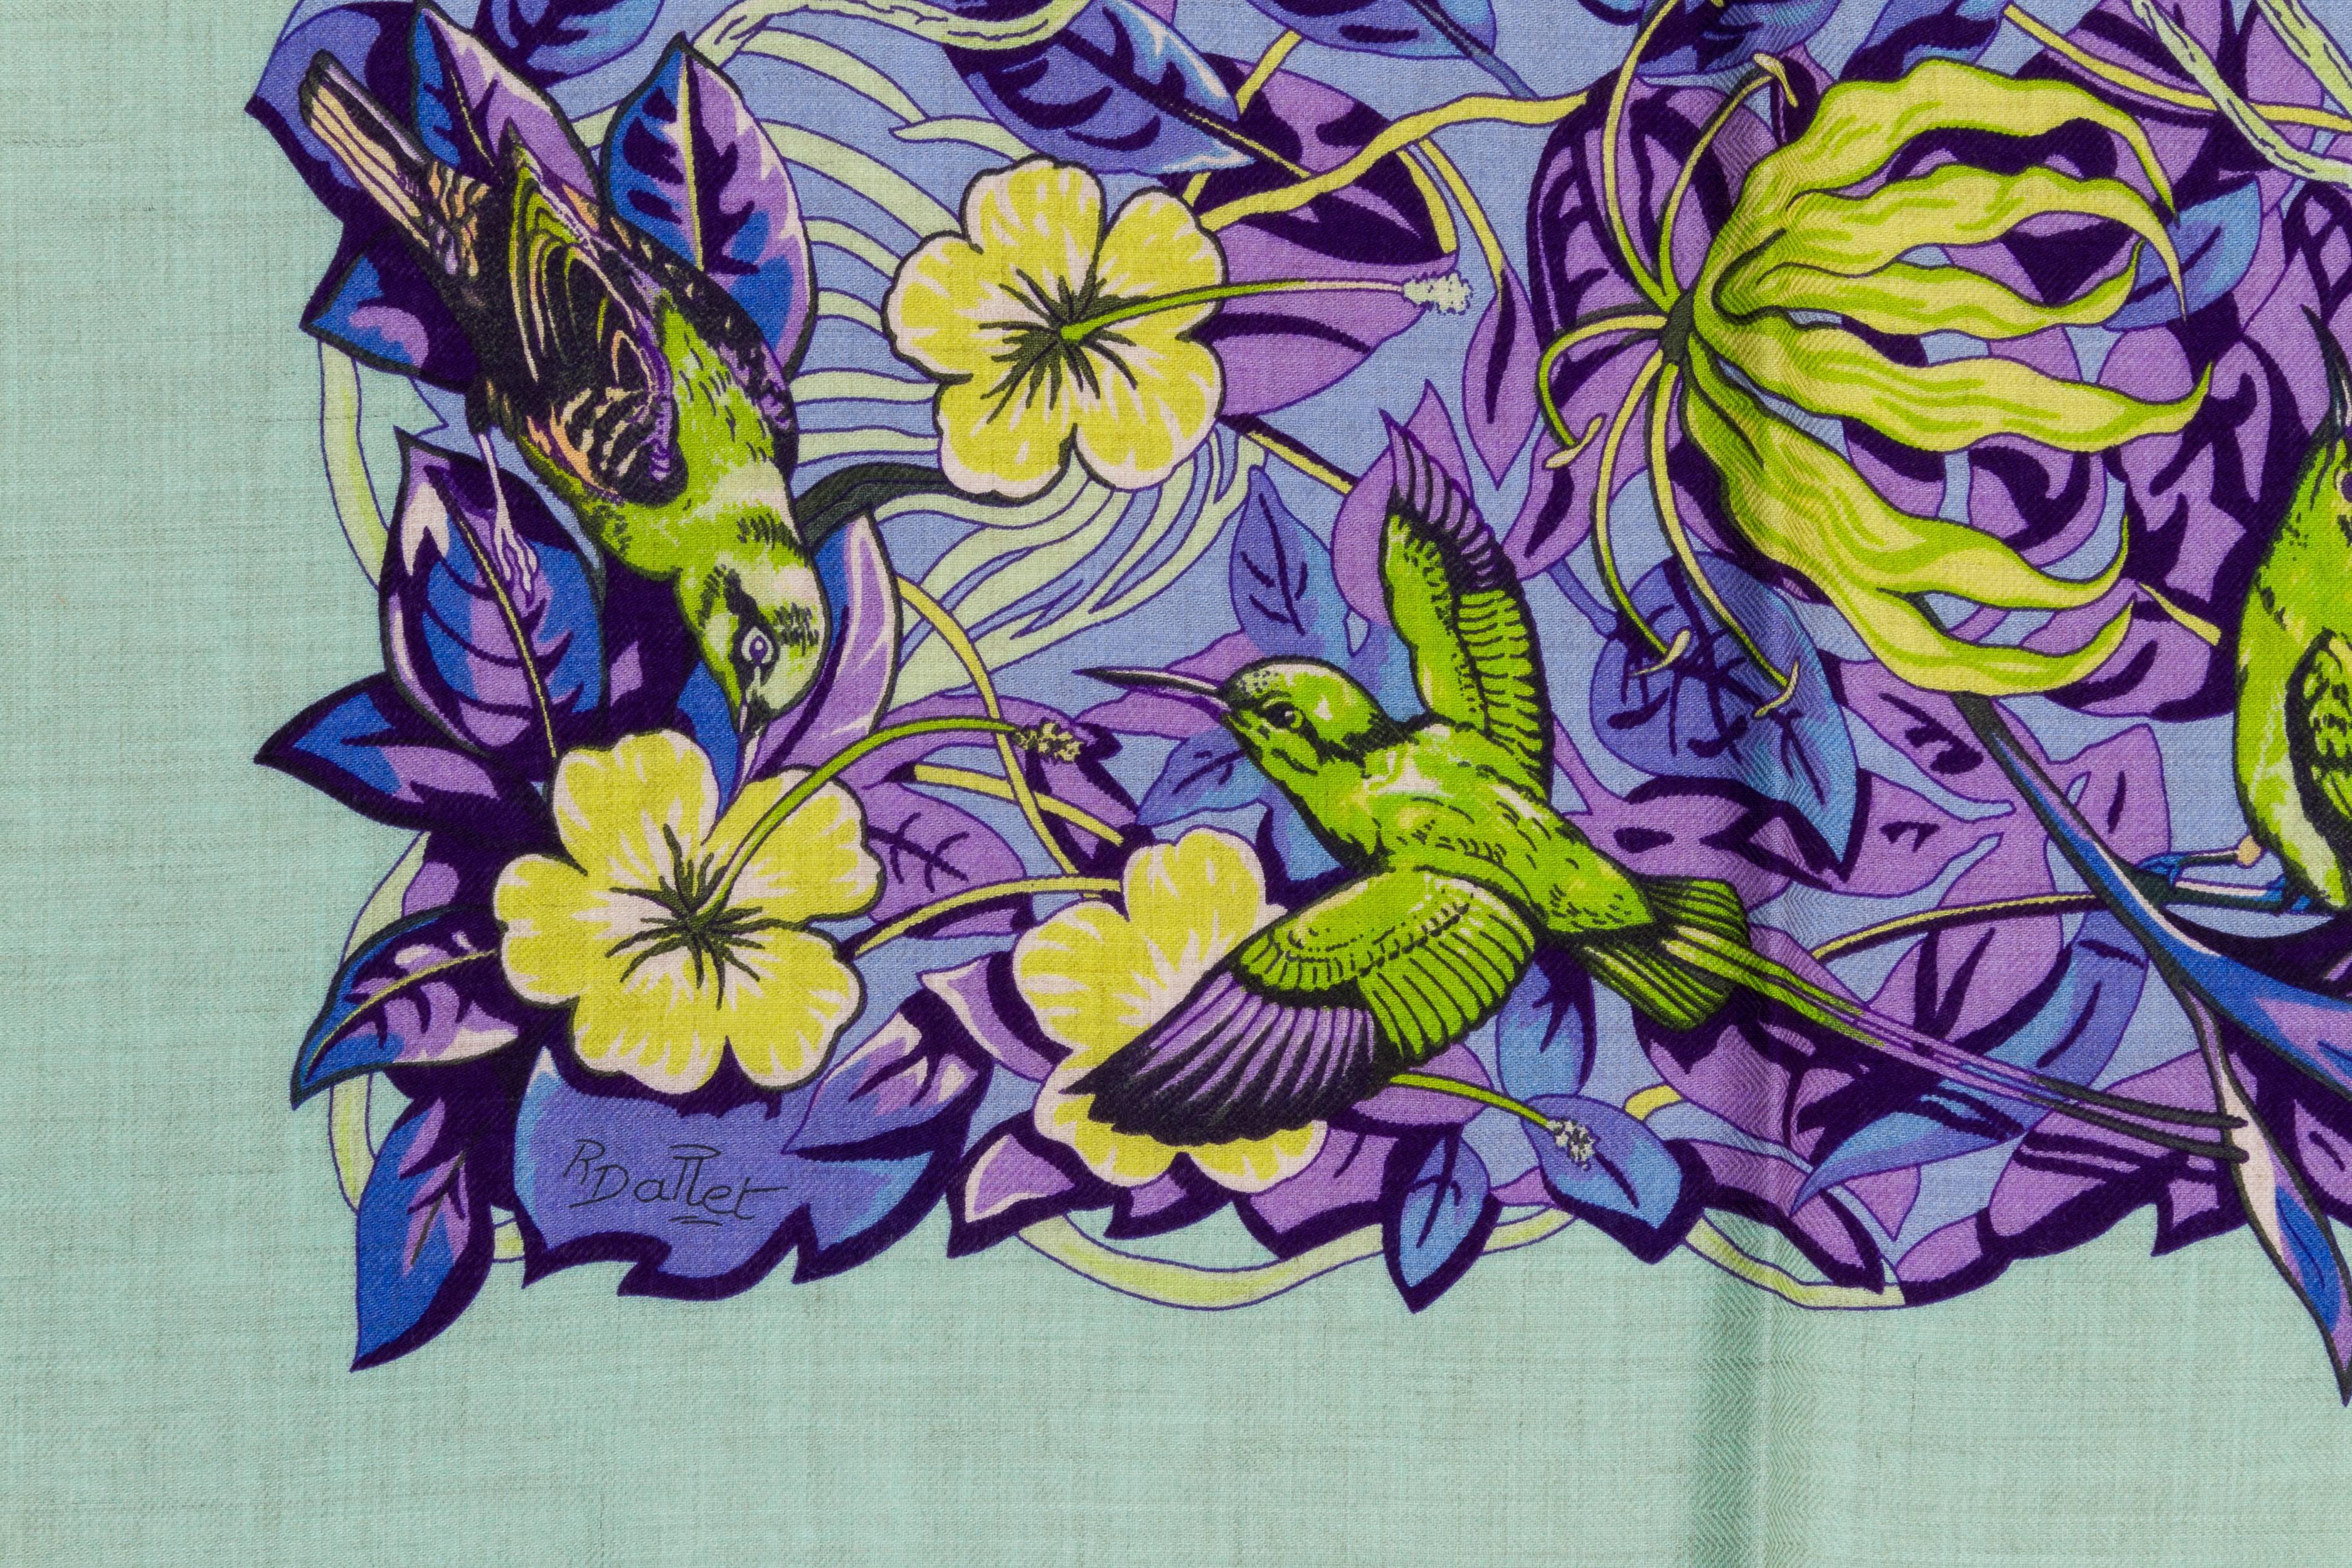 Rare Hermès Dallet designer cashmere oversize scarf with Cheetah jungle scene in seafoam green, purples and periwinkle. 54